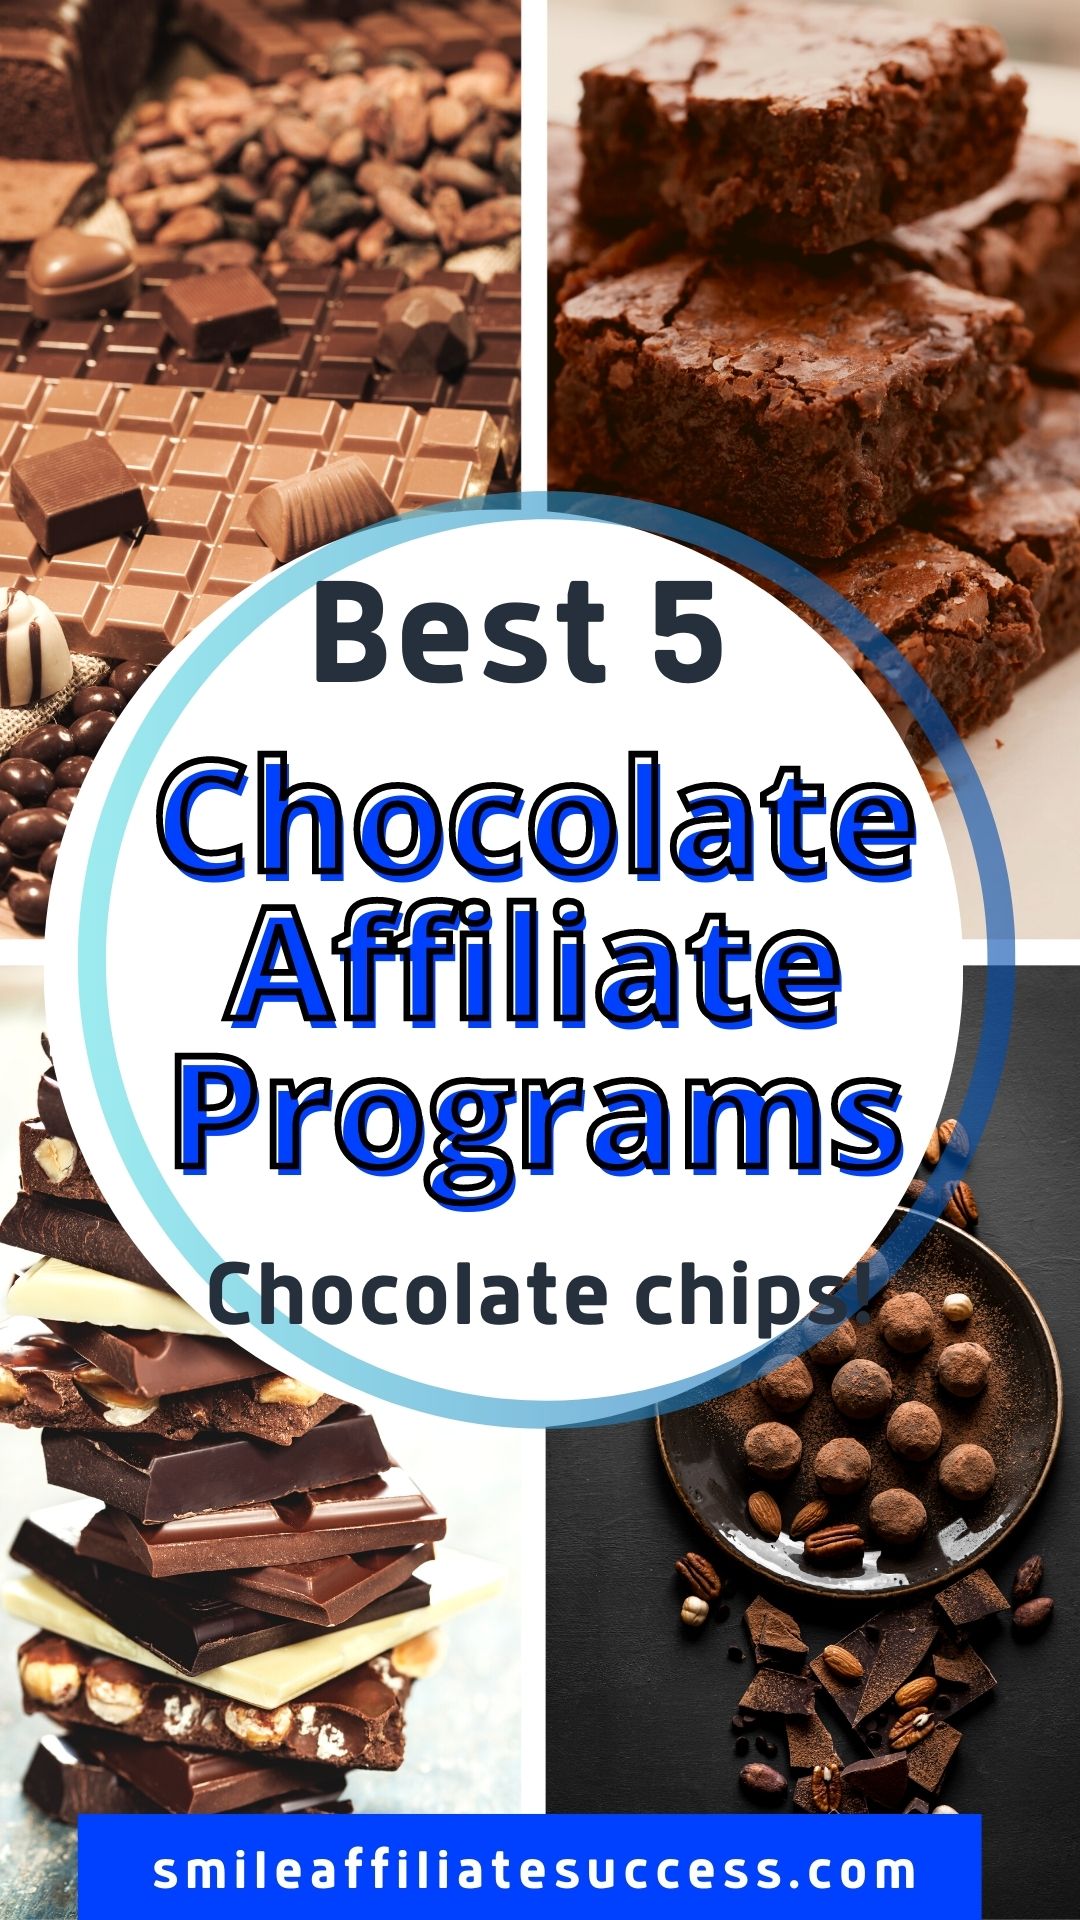 Best 5 Chocolate Affiliate Programs